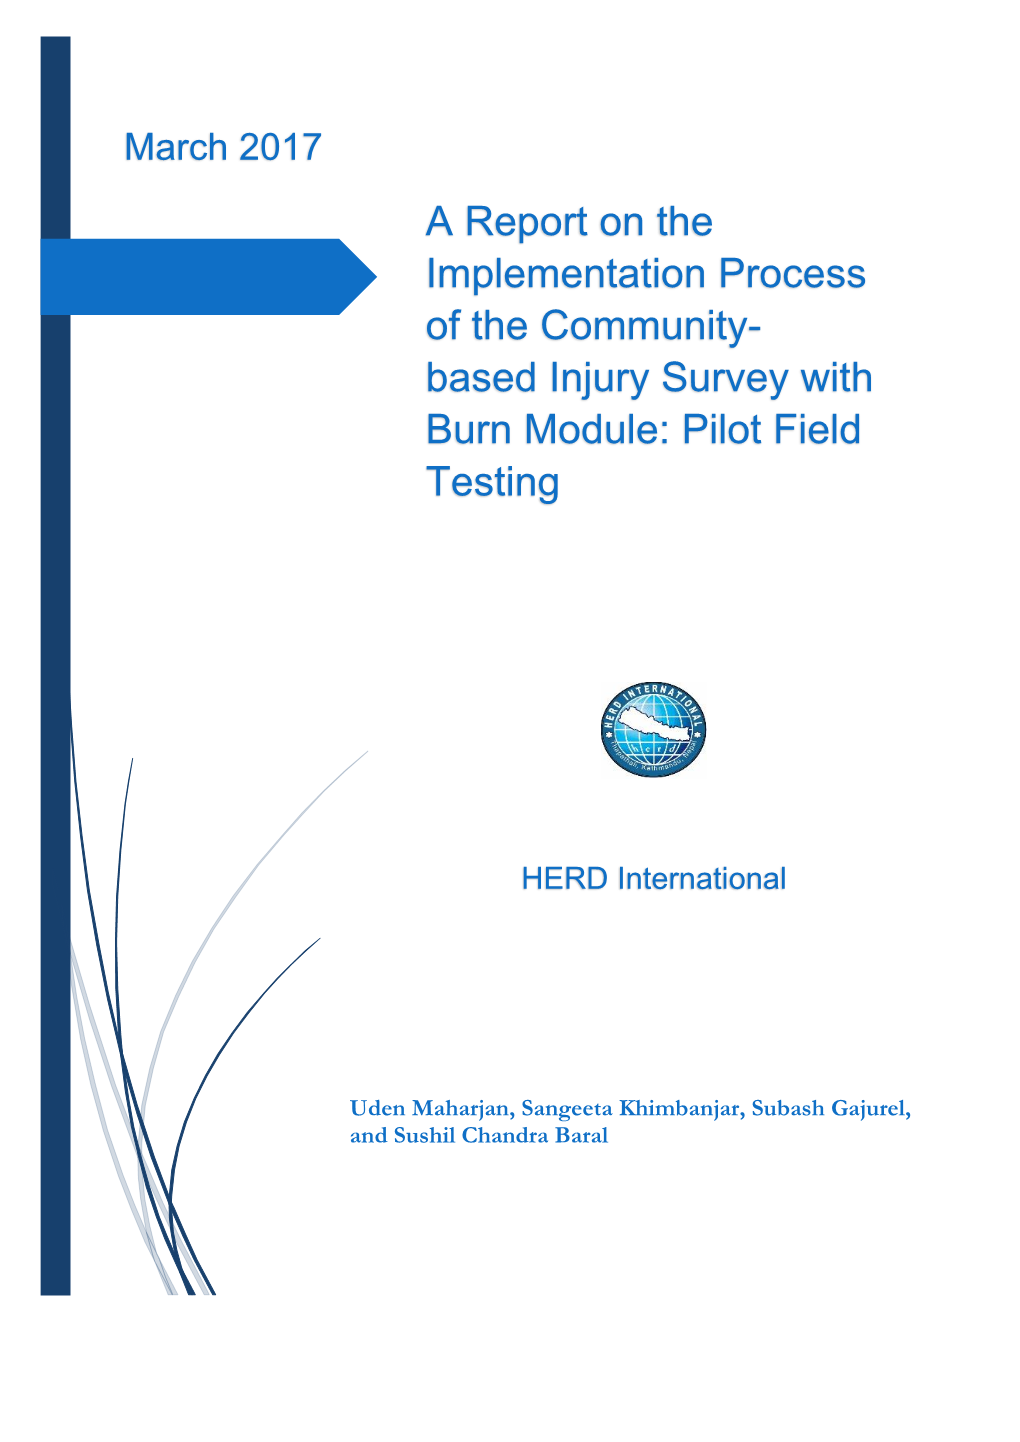 Based Injury Survey with Burn Module: Pilot Field Testing